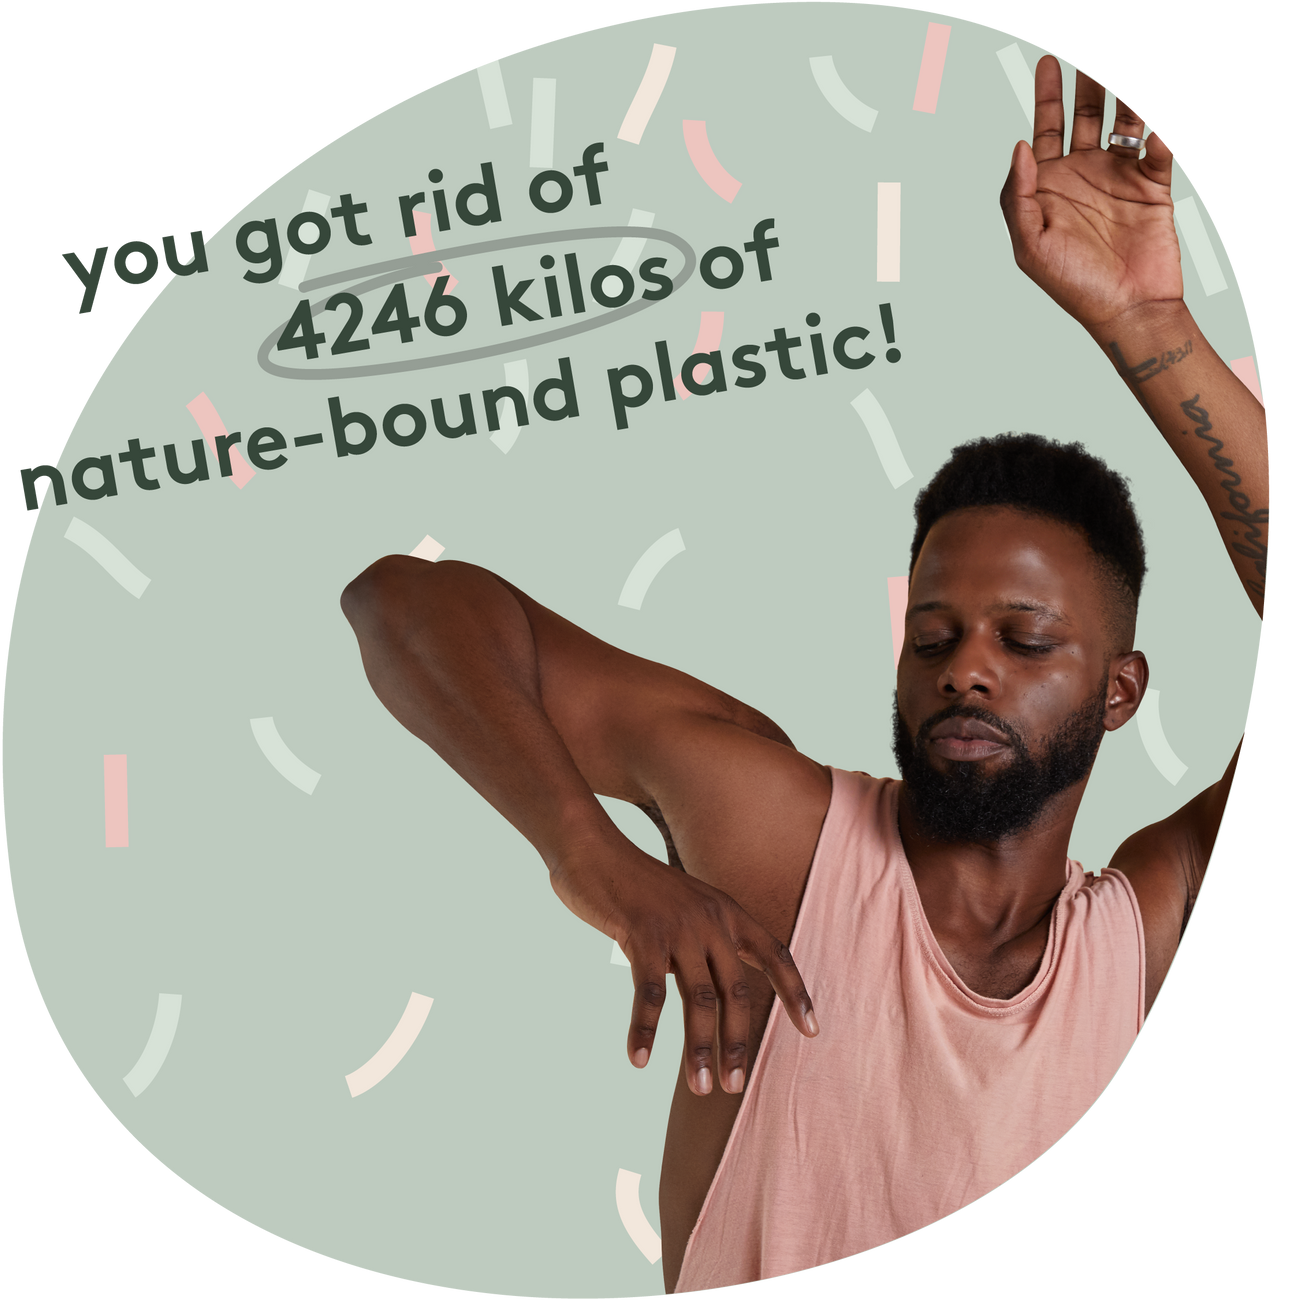 You got rid of 4246 kilos of nature-bound plastic!